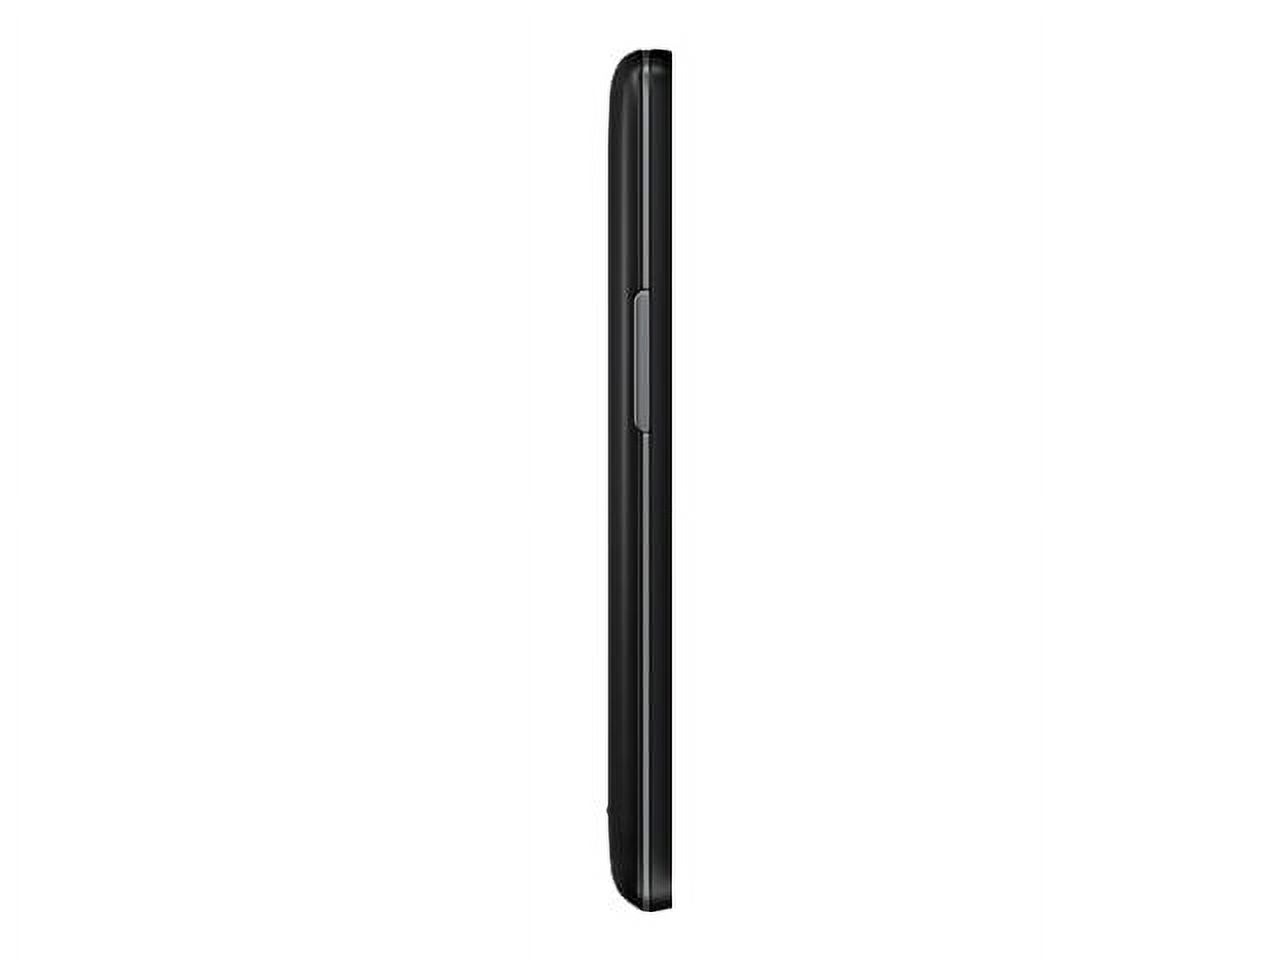 LG REALM - 3G smartphone - RAM 1 GB / Internal Memory 4 GB - microSD slot - 4.5" - 800 x 480 pixels - rear camera 5 MP - Boost - black - image 5 of 7